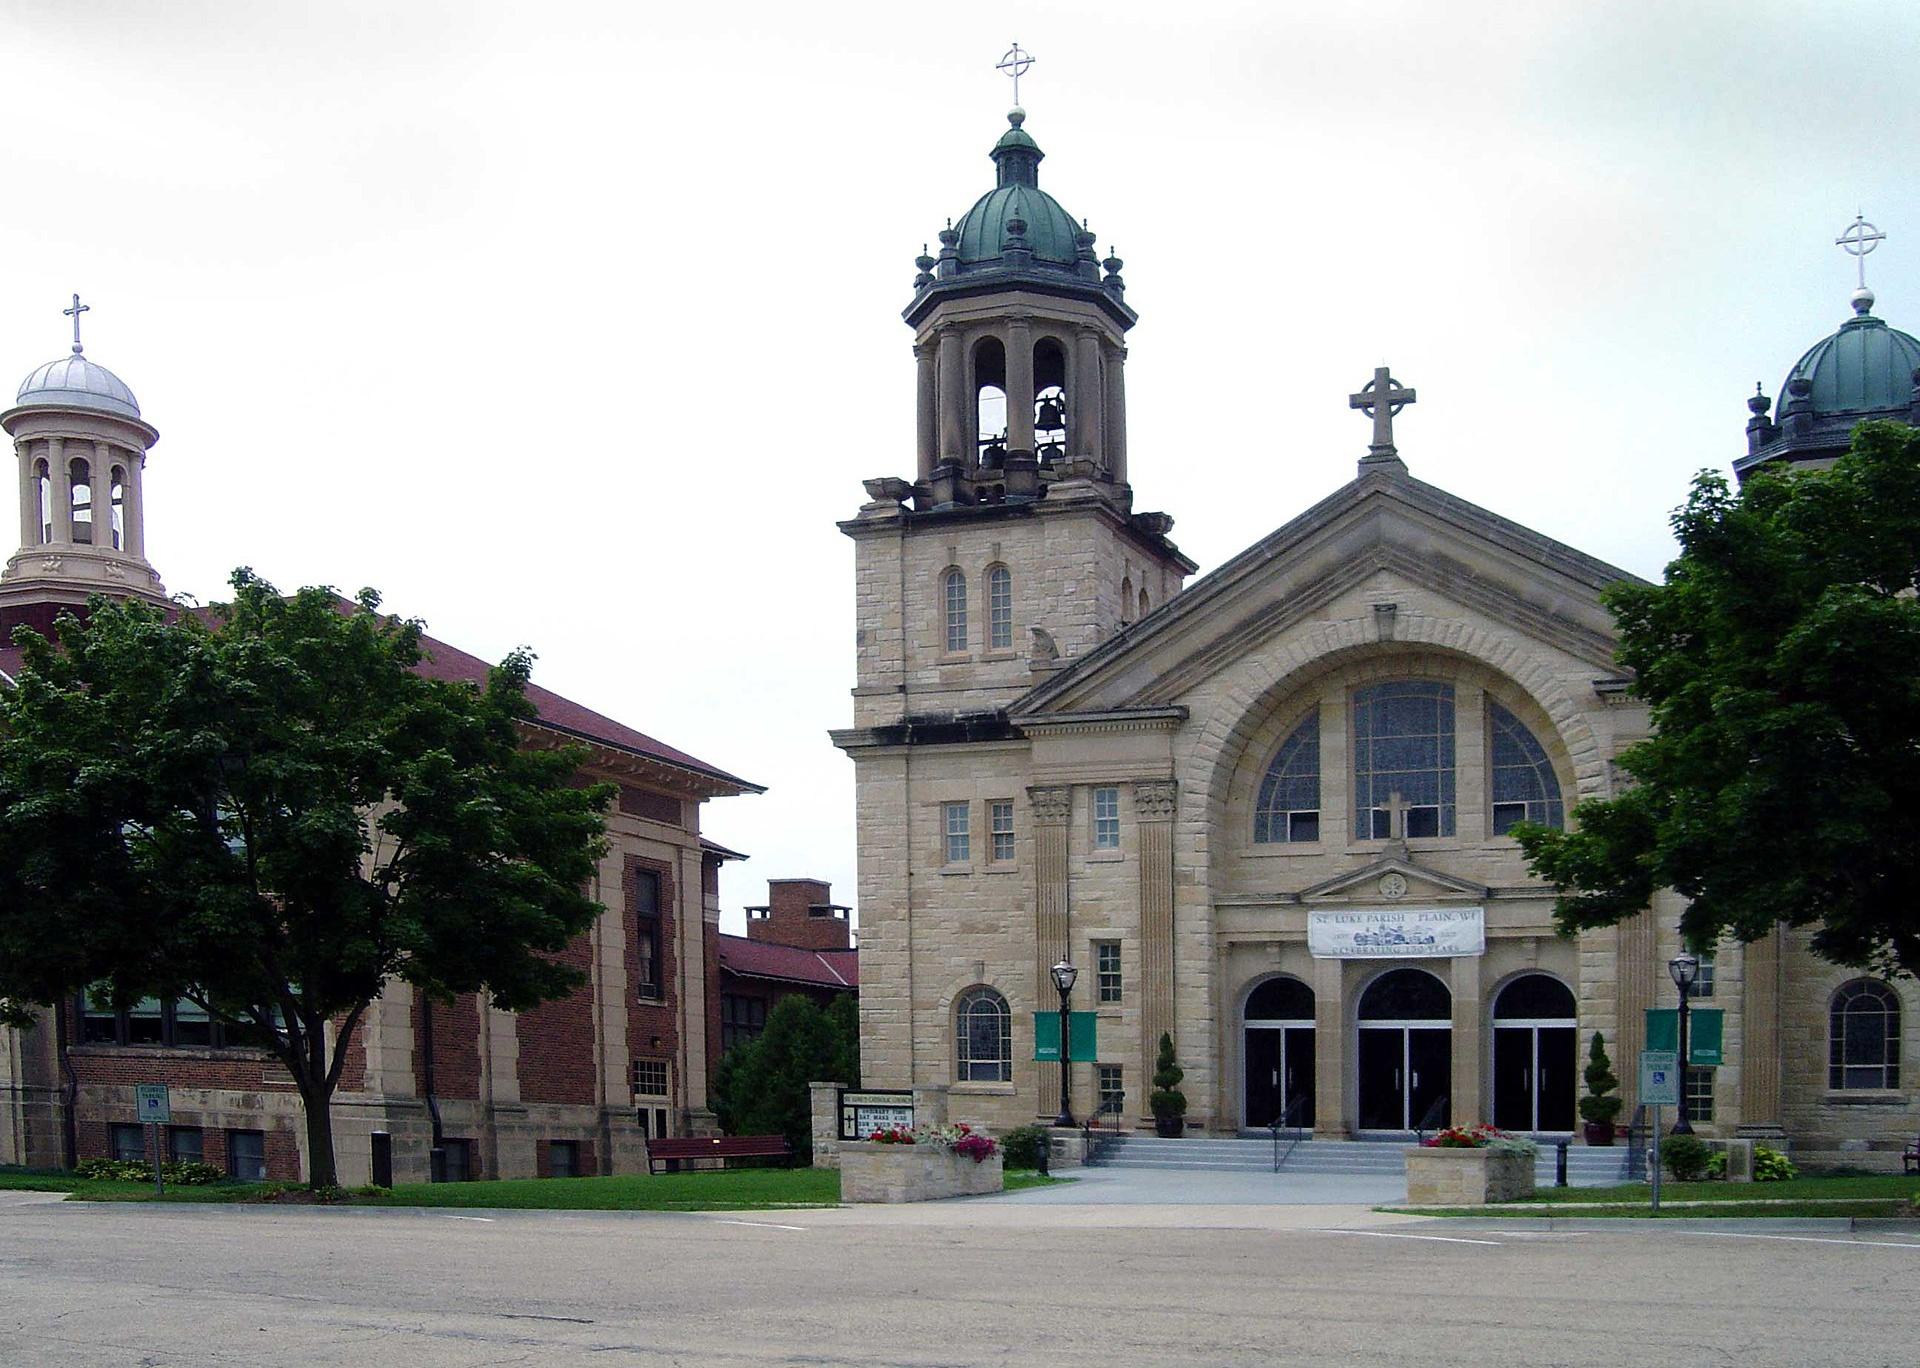 St. Luke's Catholic Church and school in Plain, Wisconsin